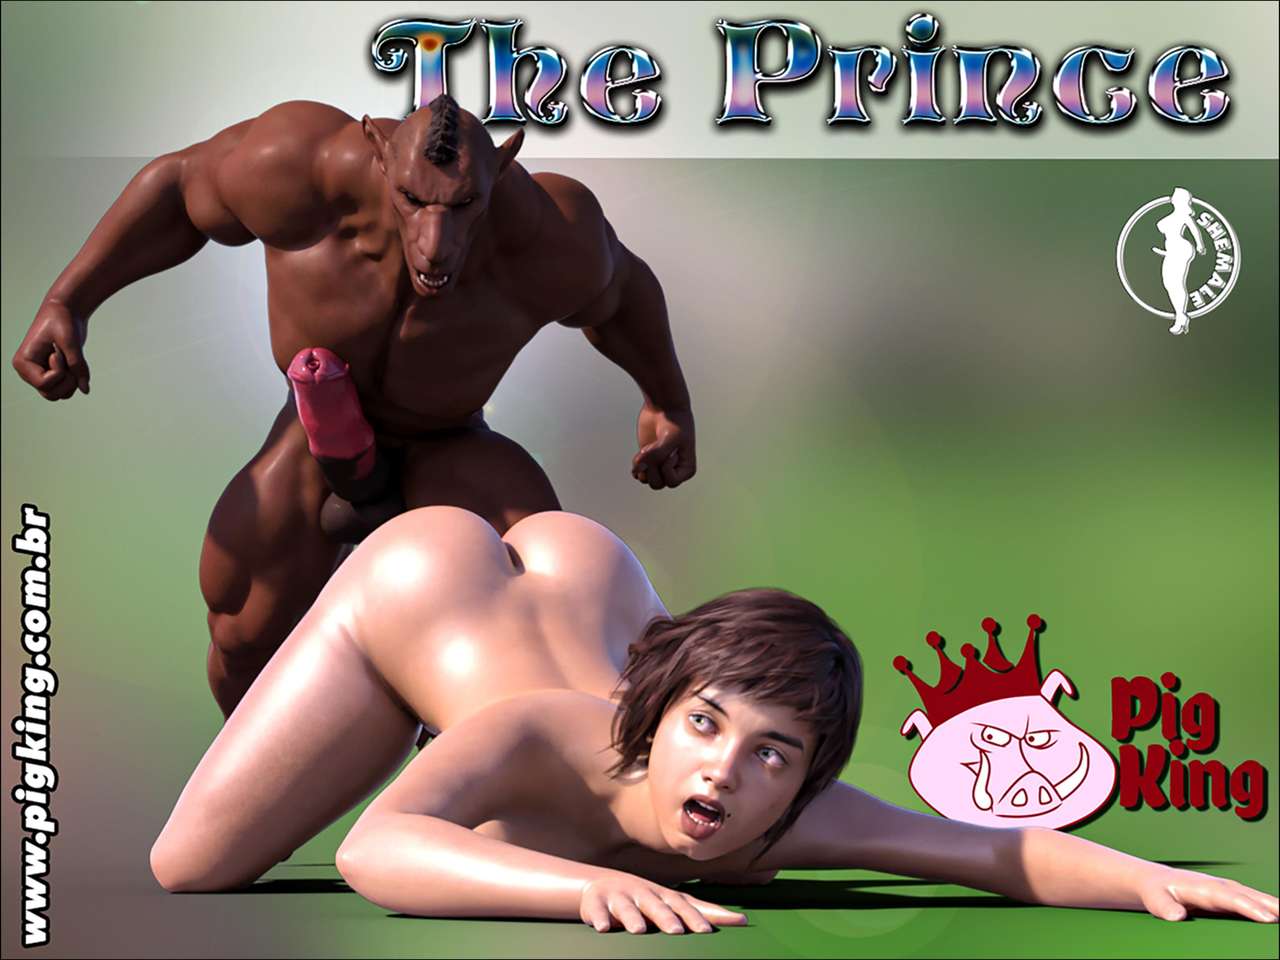 King pig porn comic